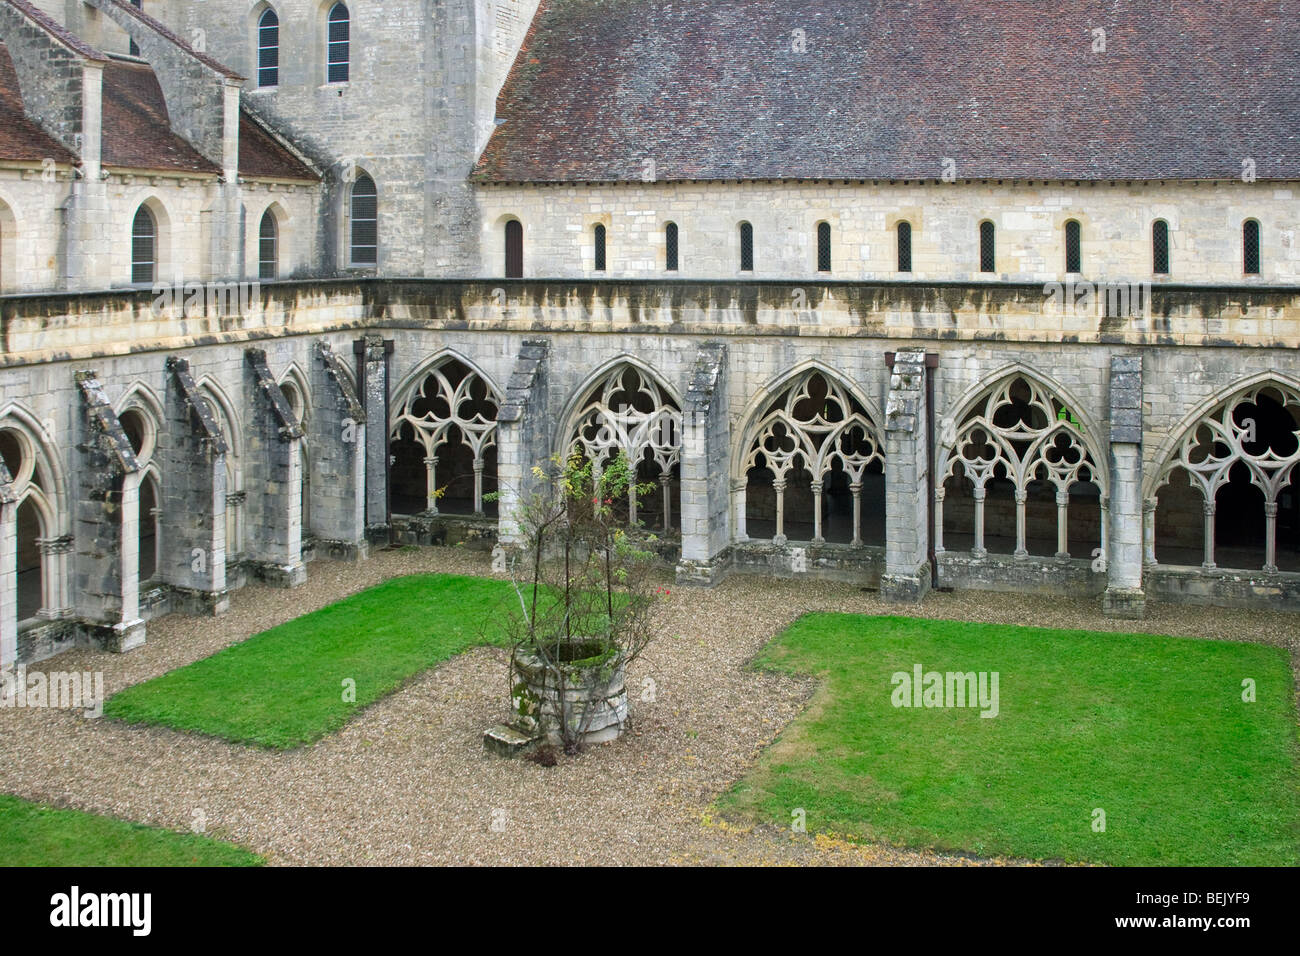 Cloister of the Cistercian abbey of Noirlac, France Stock Photo